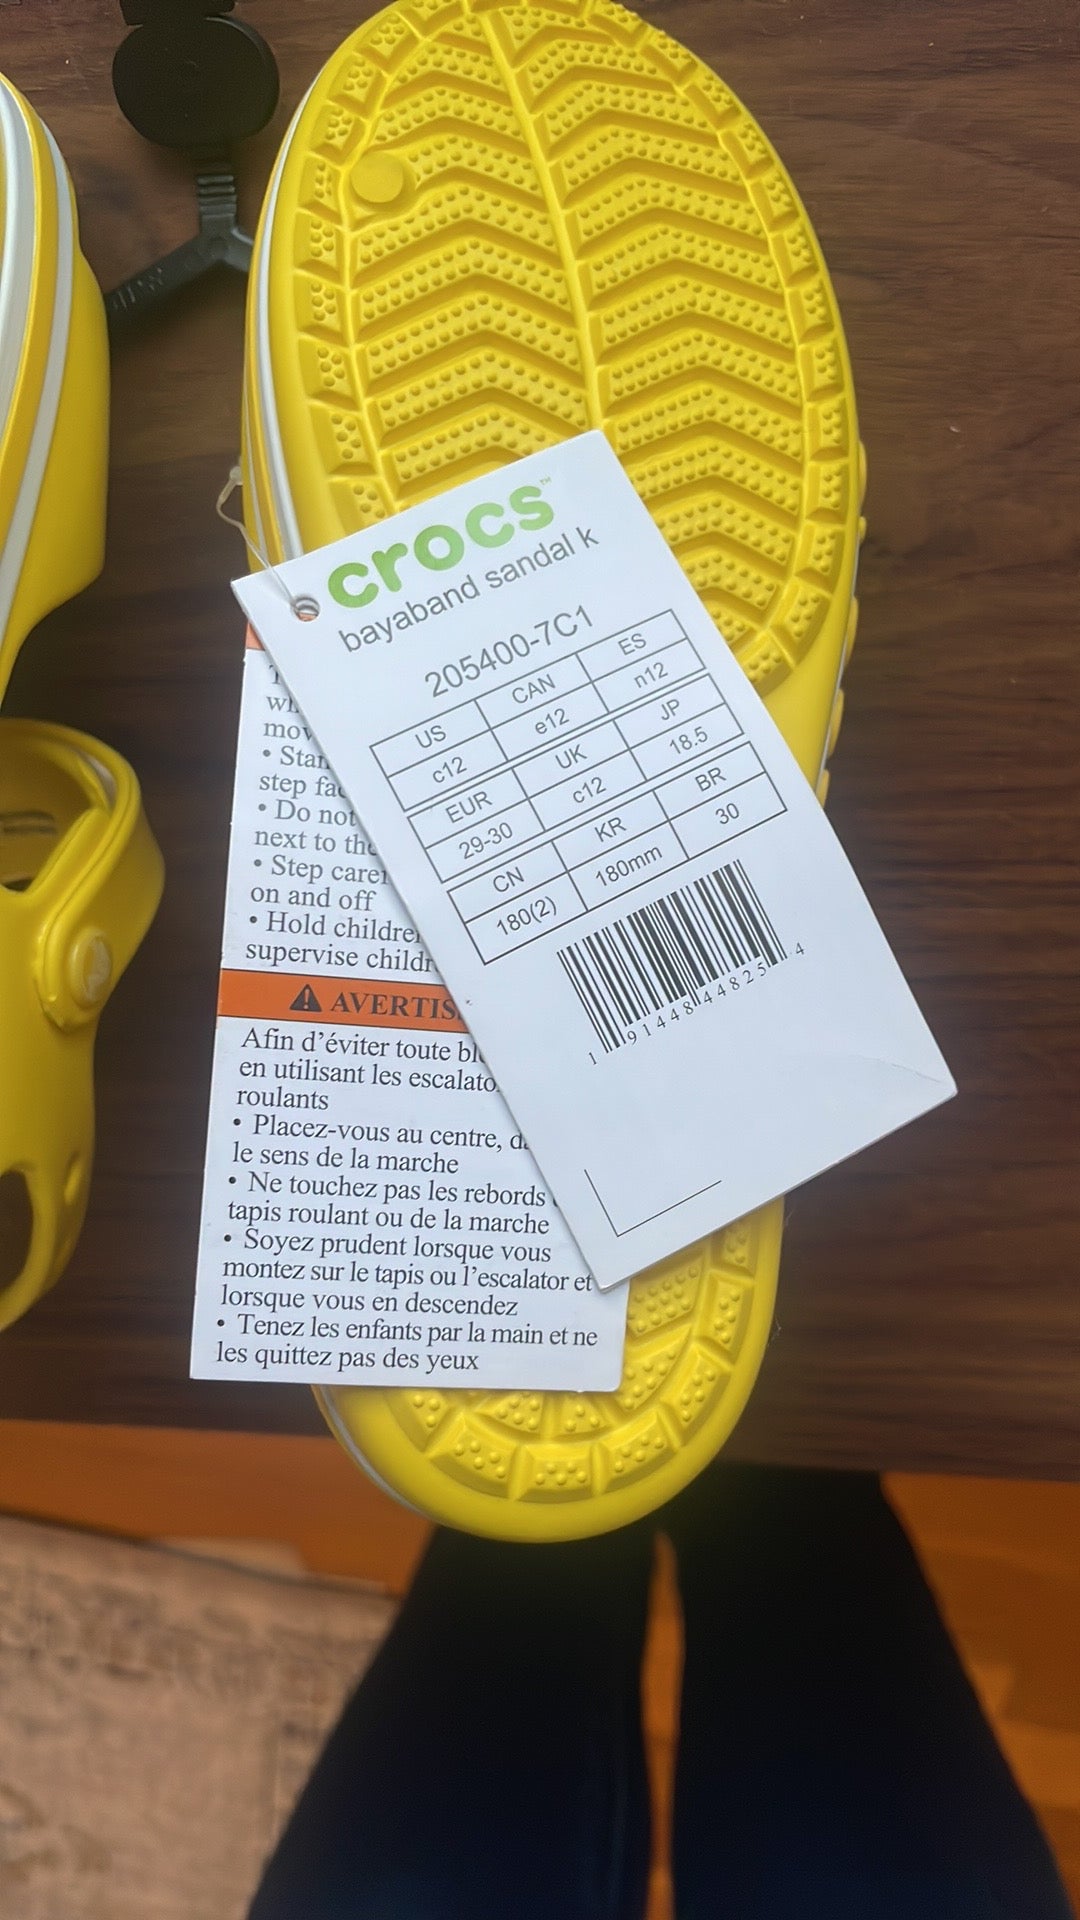 * Reduced NEW Crocs yellow sandals girls 12c